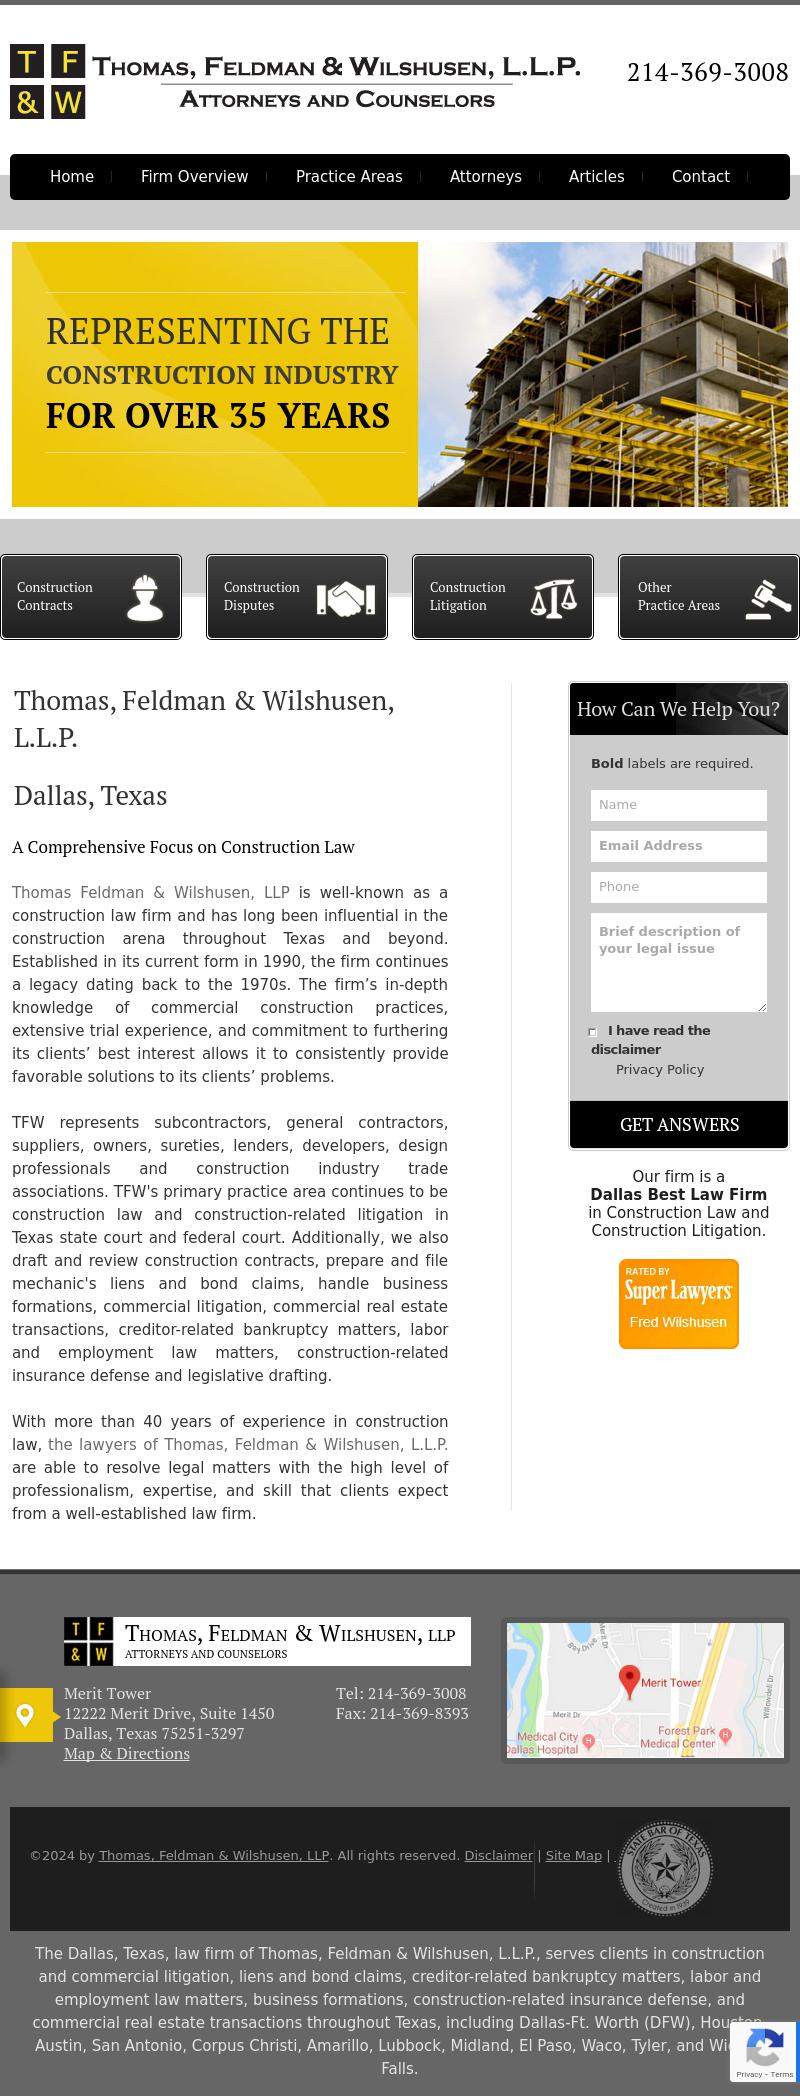 Thomas, Feldman & Wilshusen, LLP - Dallas TX Lawyers